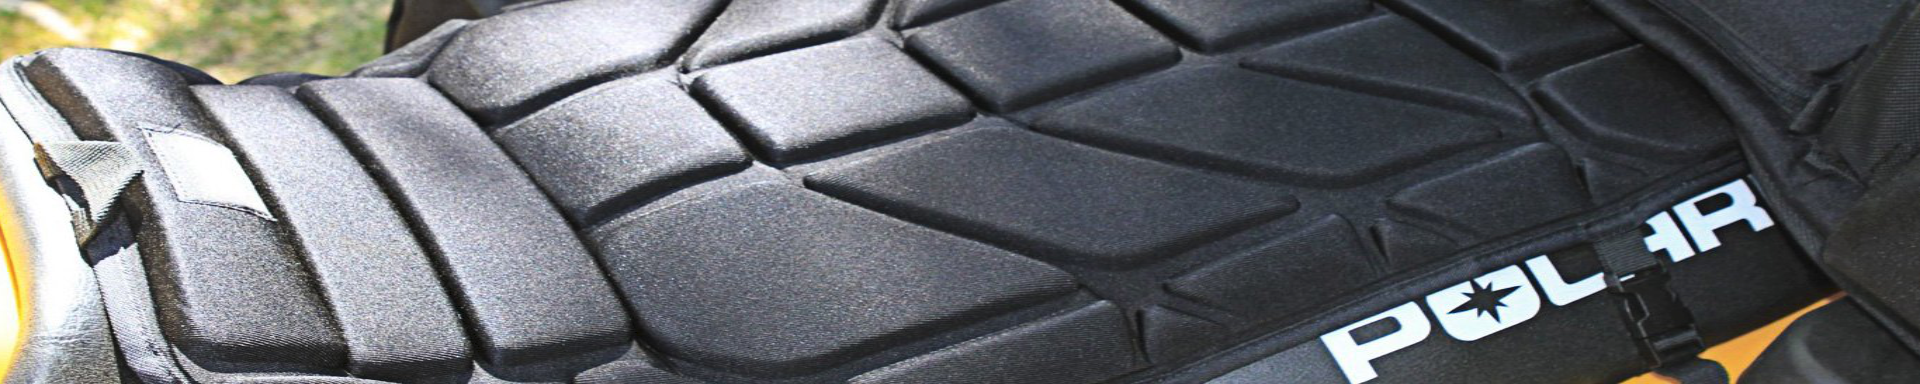 Seat Pads | MunroPowersports.com | Munro Industries mp-100803011605